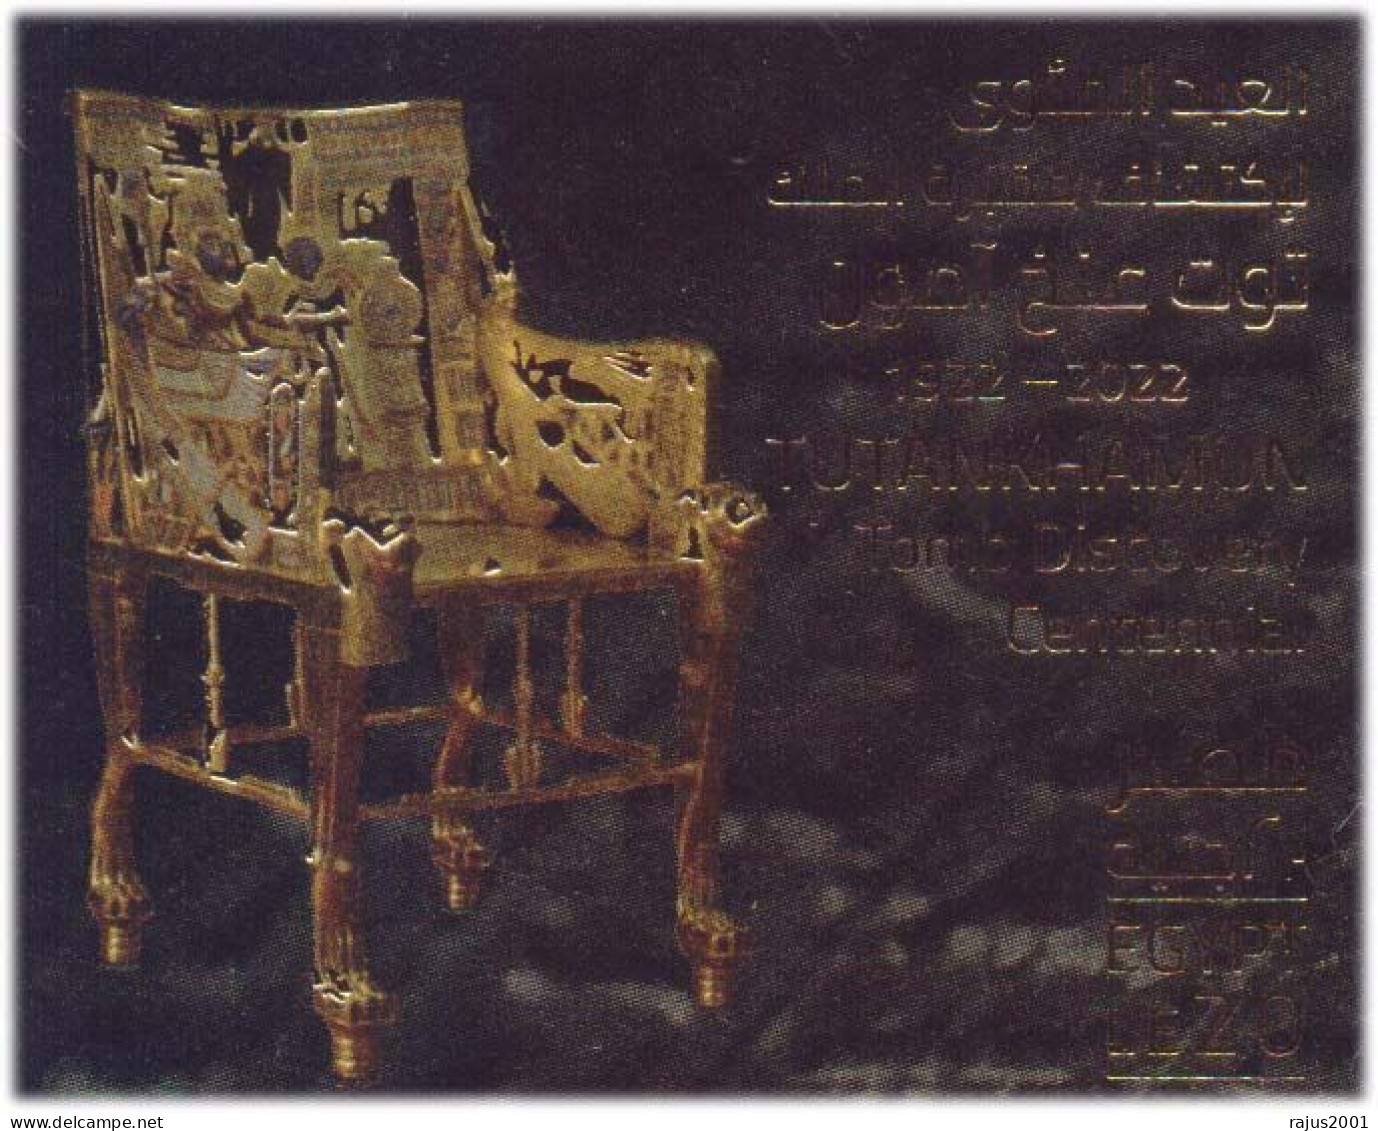 King Tutankhamun Tomb Discovery, Tutankhamun, Tutankhamen, Pharaoh, Egyptology, History, GOLD PRINT UNUSUAL 4x Post Card - Egiptología